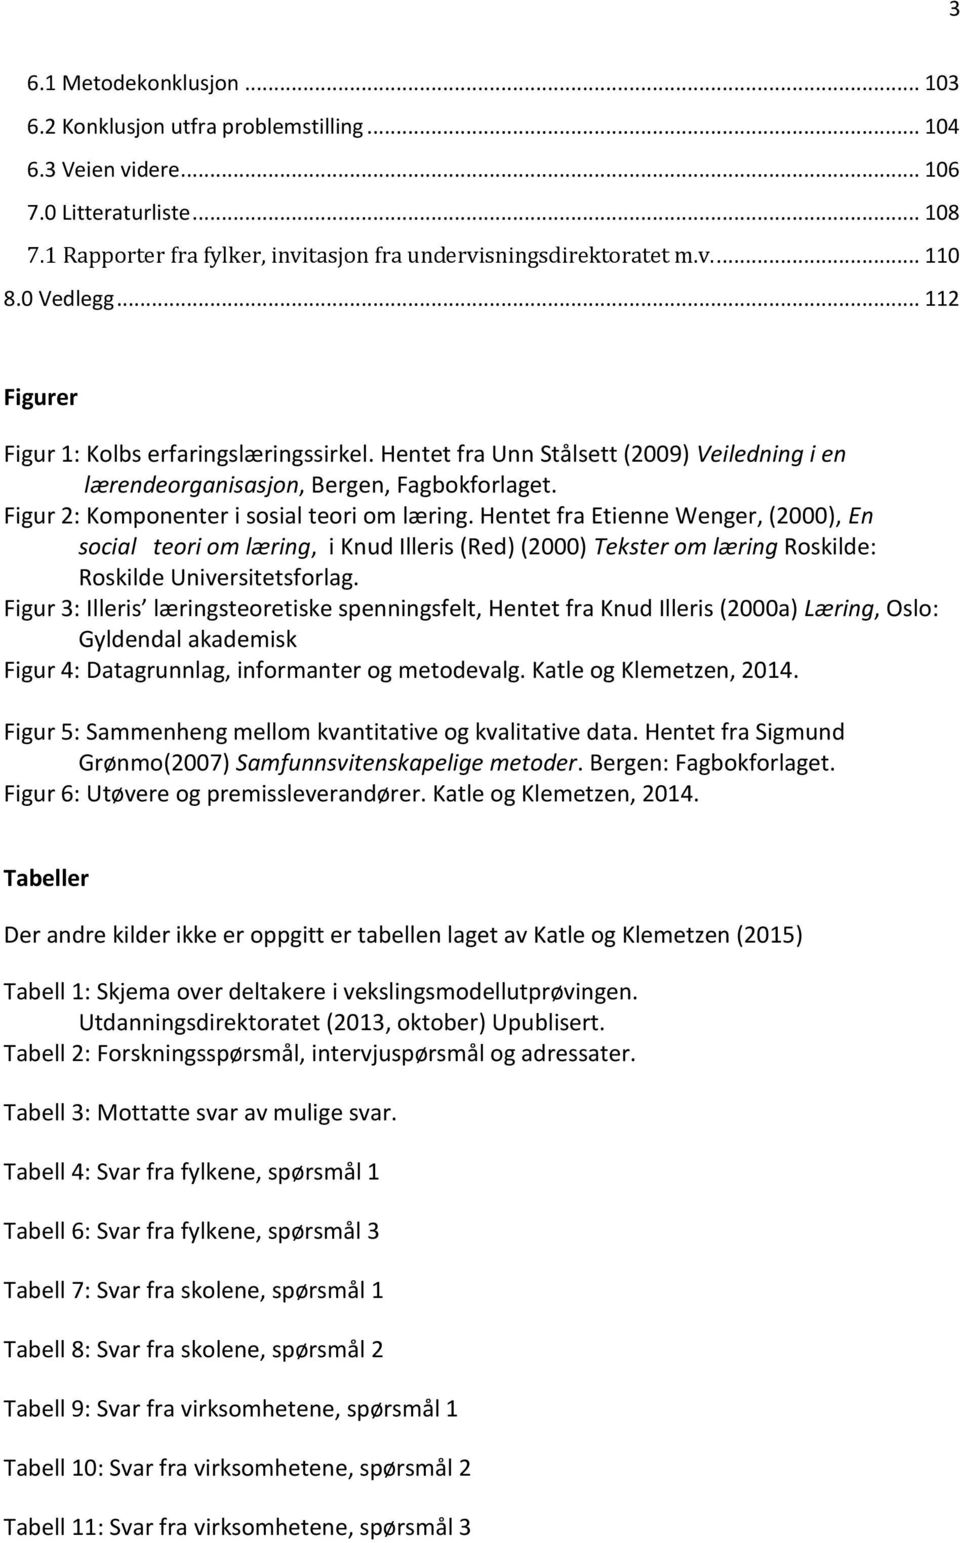 Figur 2: Komponenter i sosial teori om læring. Hentet fra Etienne Wenger, (2000), En social teori om læring, i Knud Illeris (Red) (2000) Tekster om læring Roskilde: Roskilde Universitetsforlag.